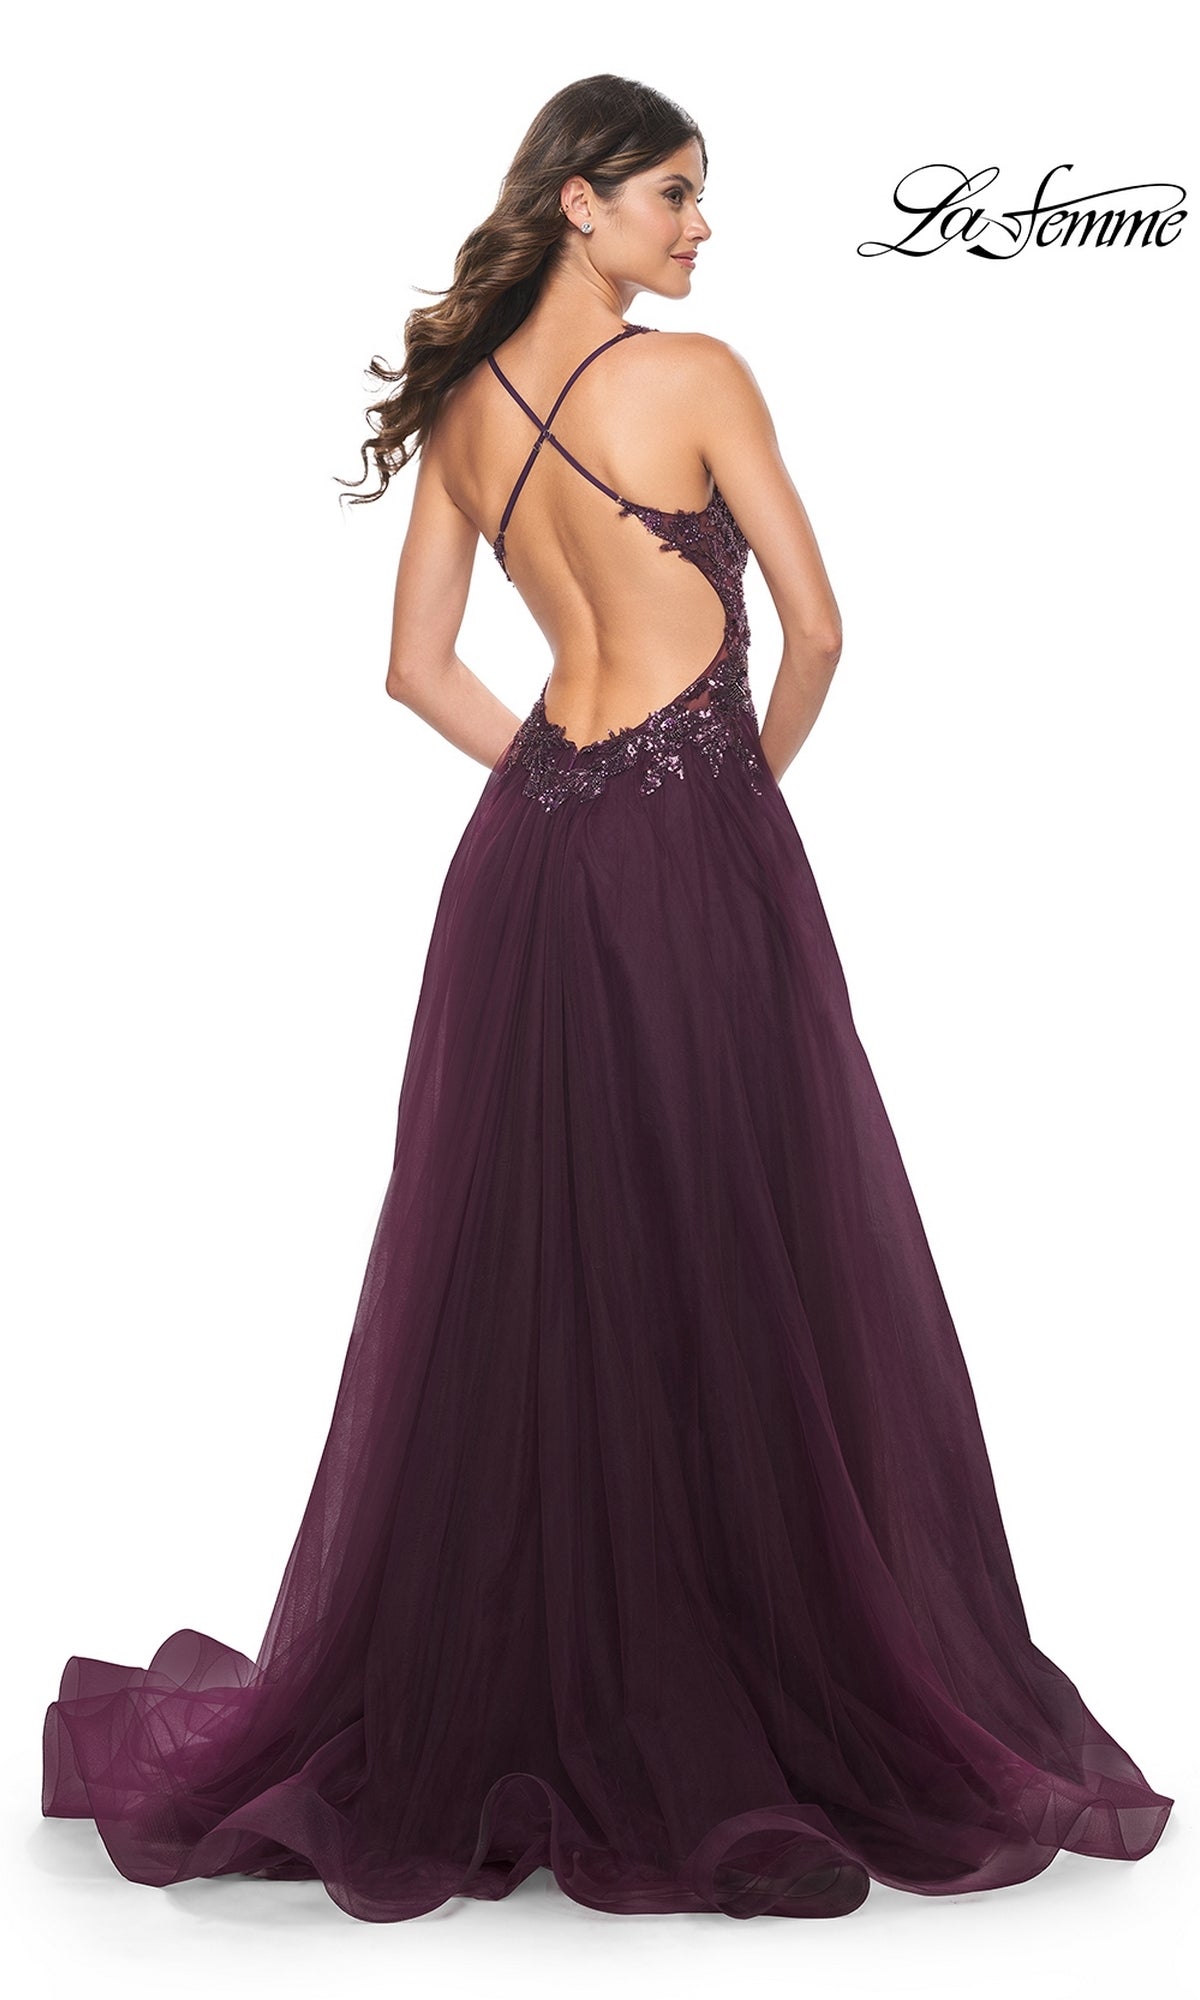  La Femme 31471 Formal Prom Dress